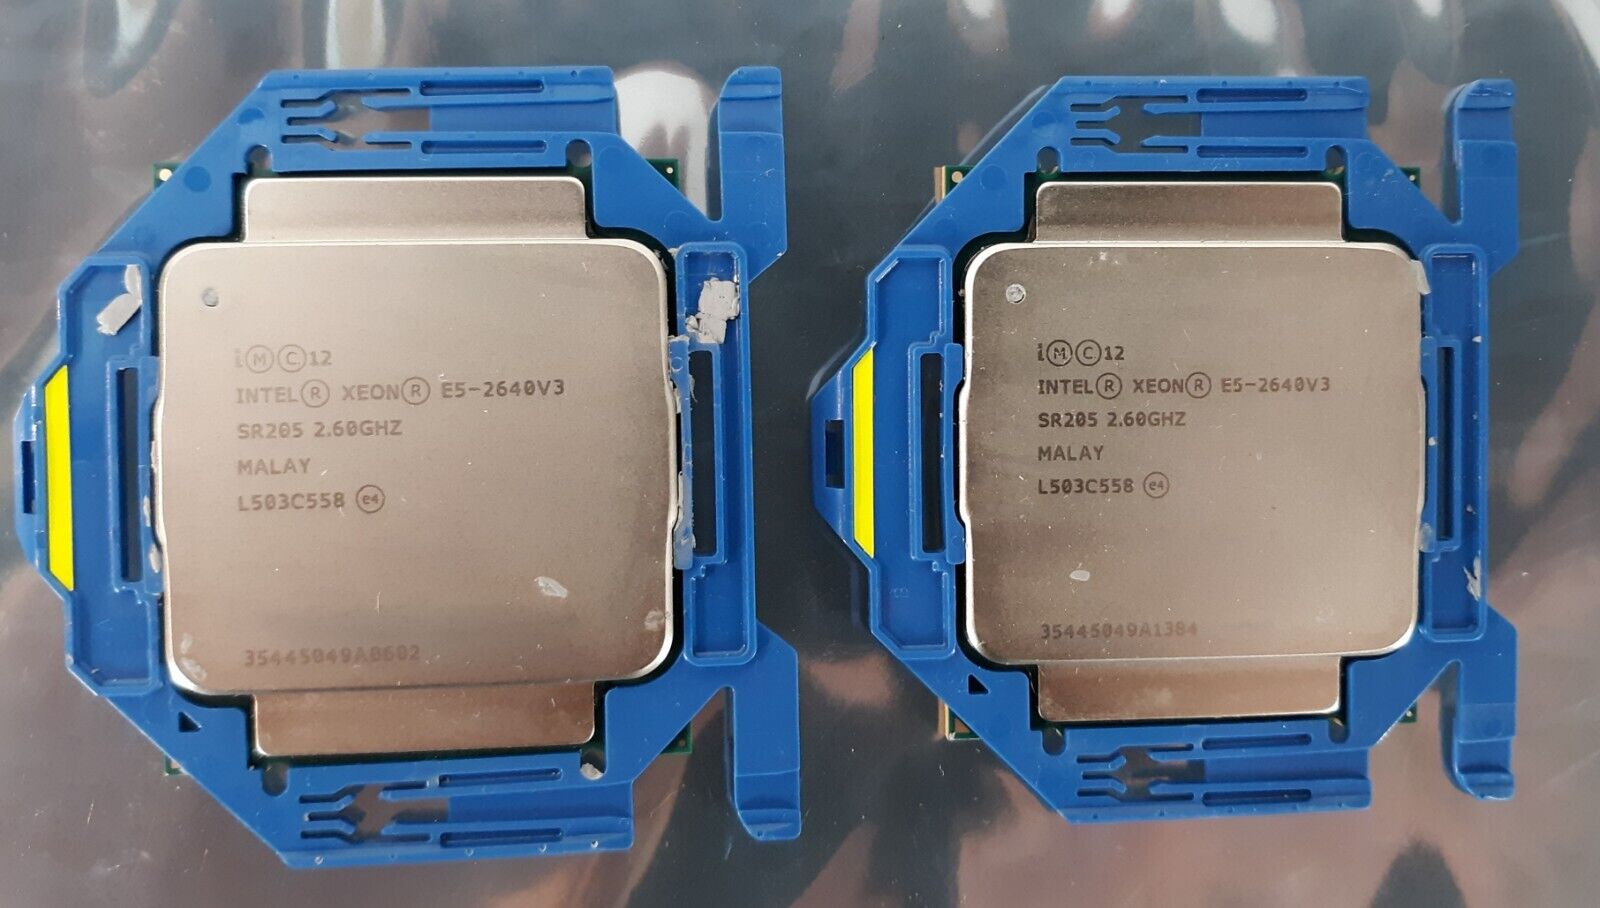 Pair of Intel Xeon E5-2640 V3 SR205 2.60GHz Server Processor w/ Blue Bracket